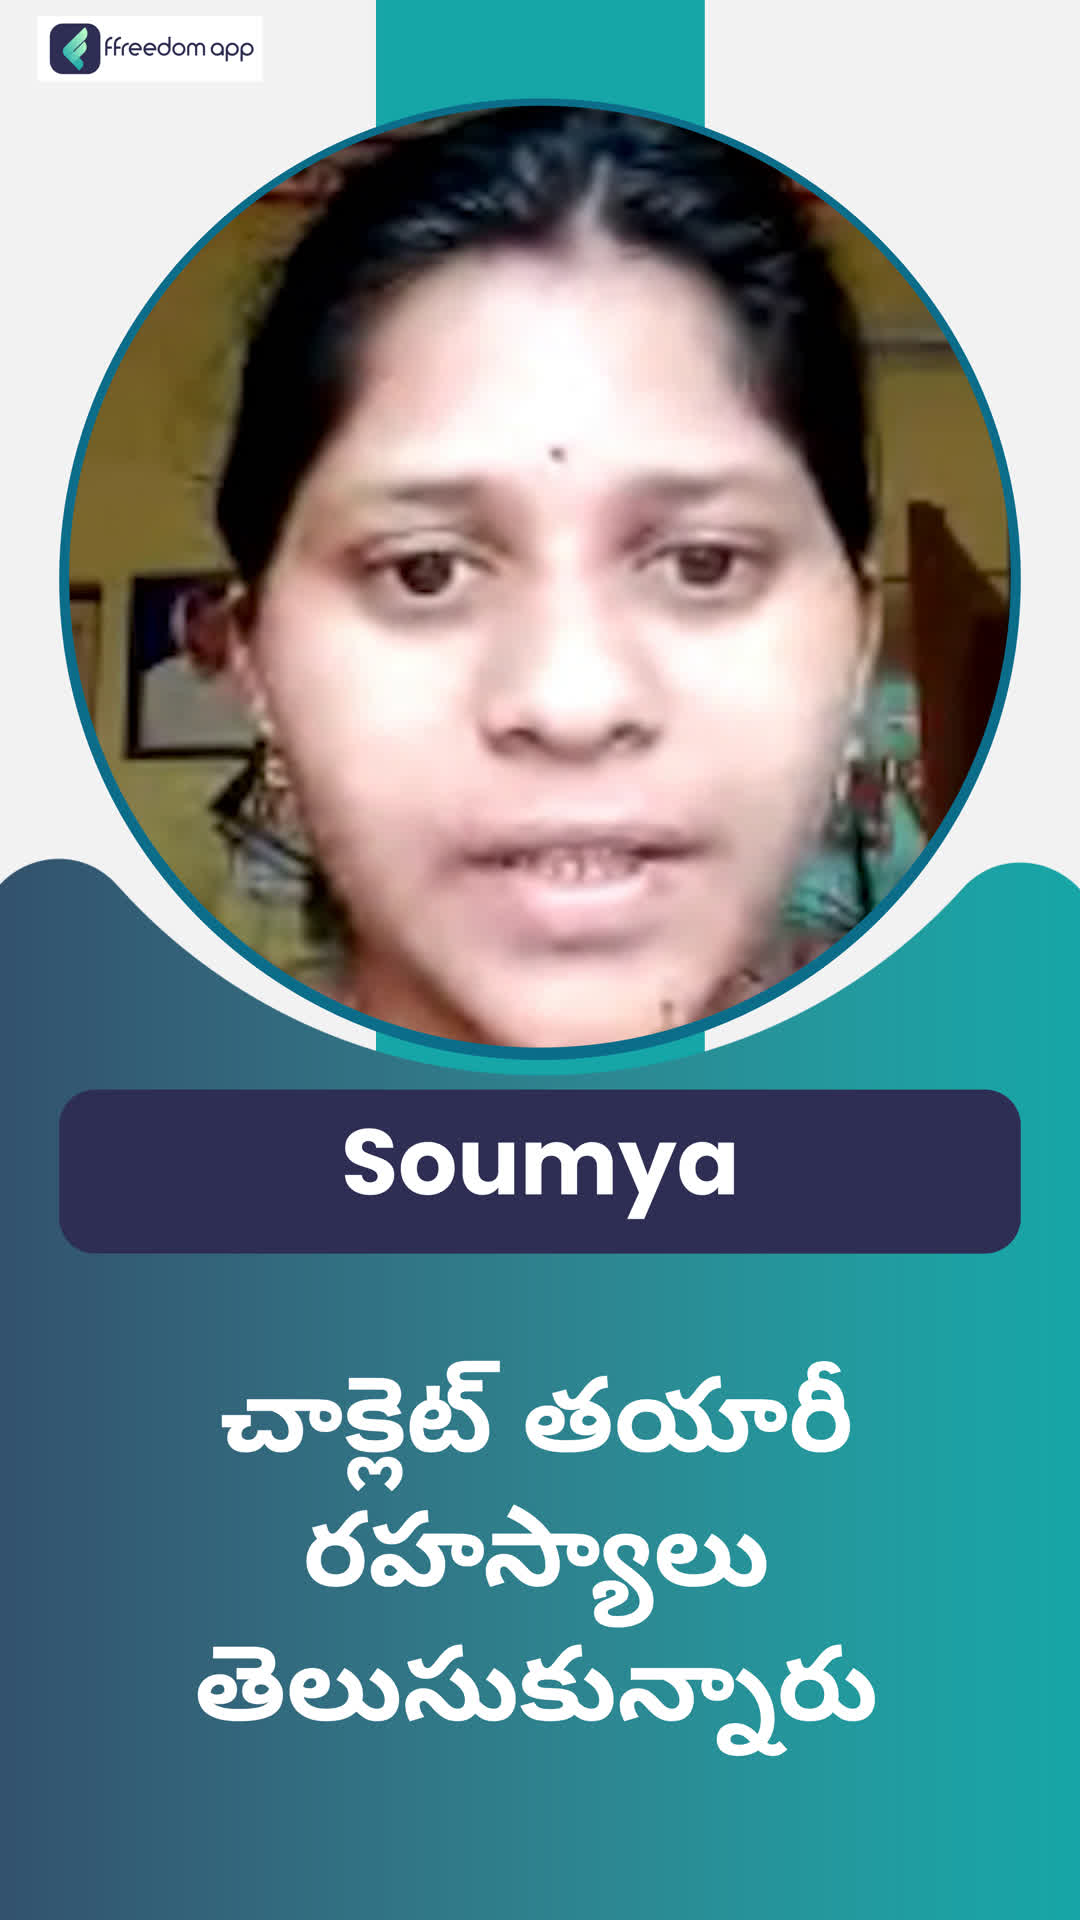 Chepuri Sowmya's Honest Review of ffreedom app - Guntur ,Andhra Pradesh